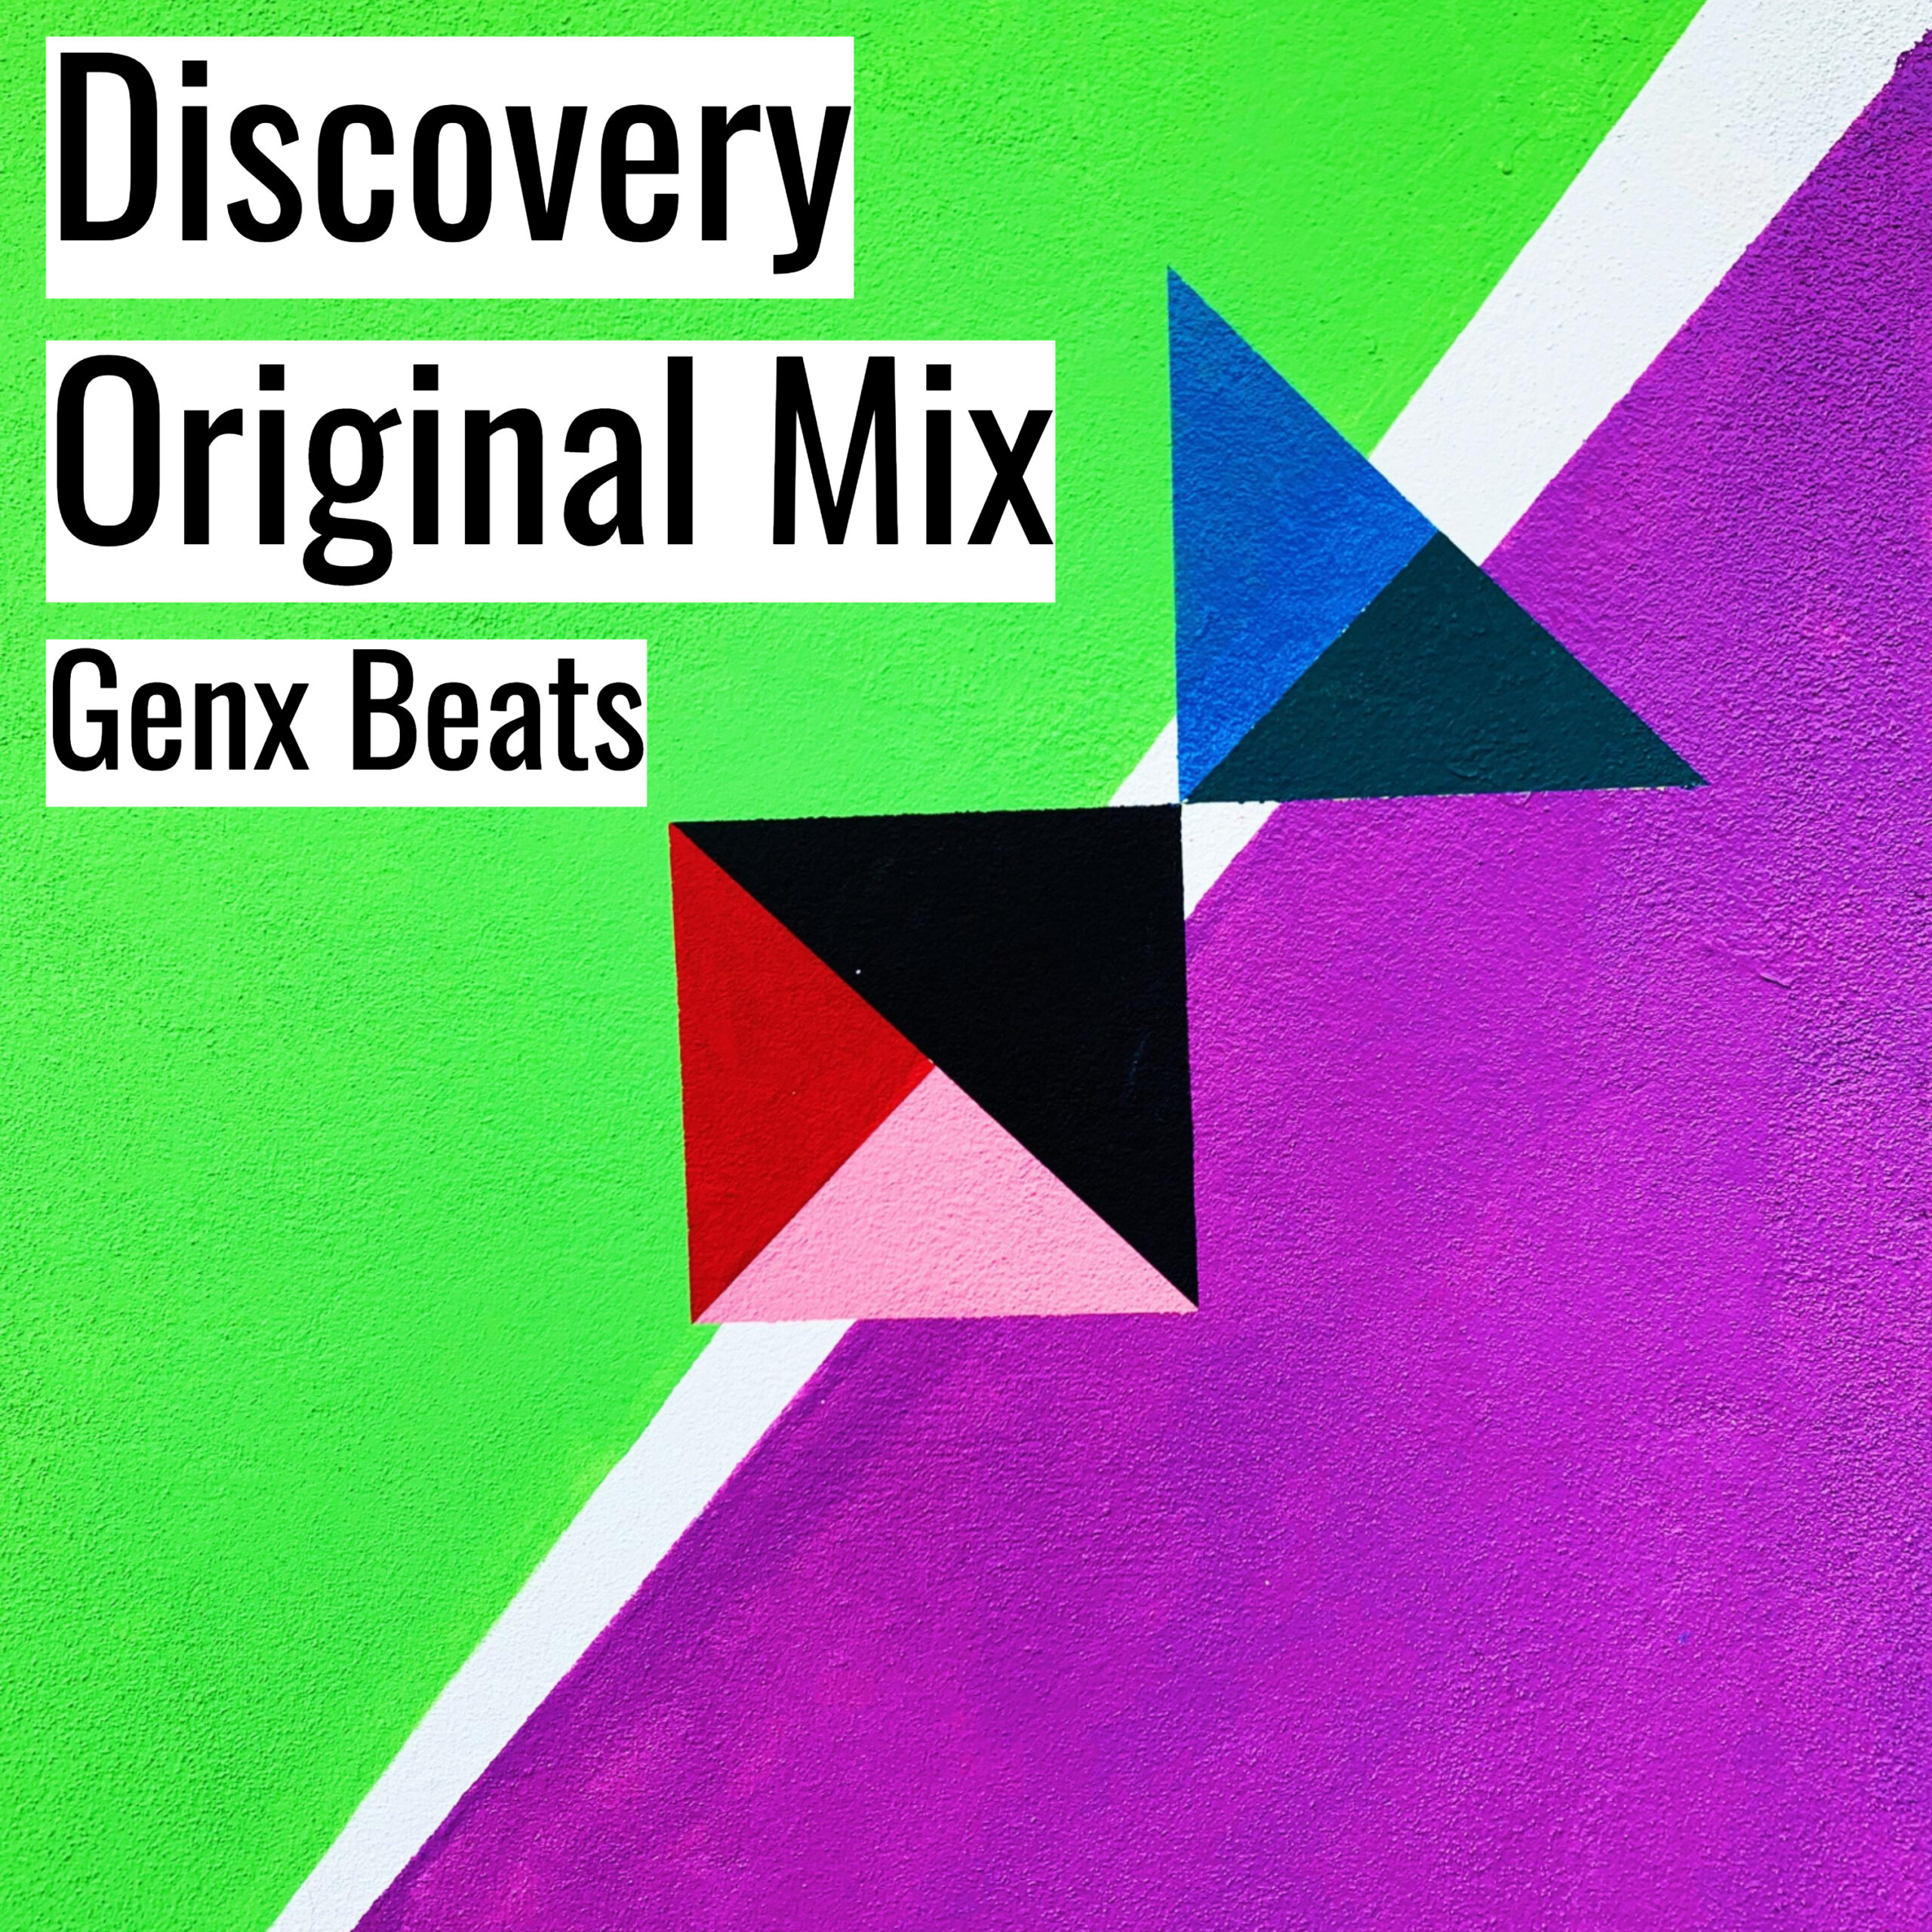 Discovery Original Mix scaled